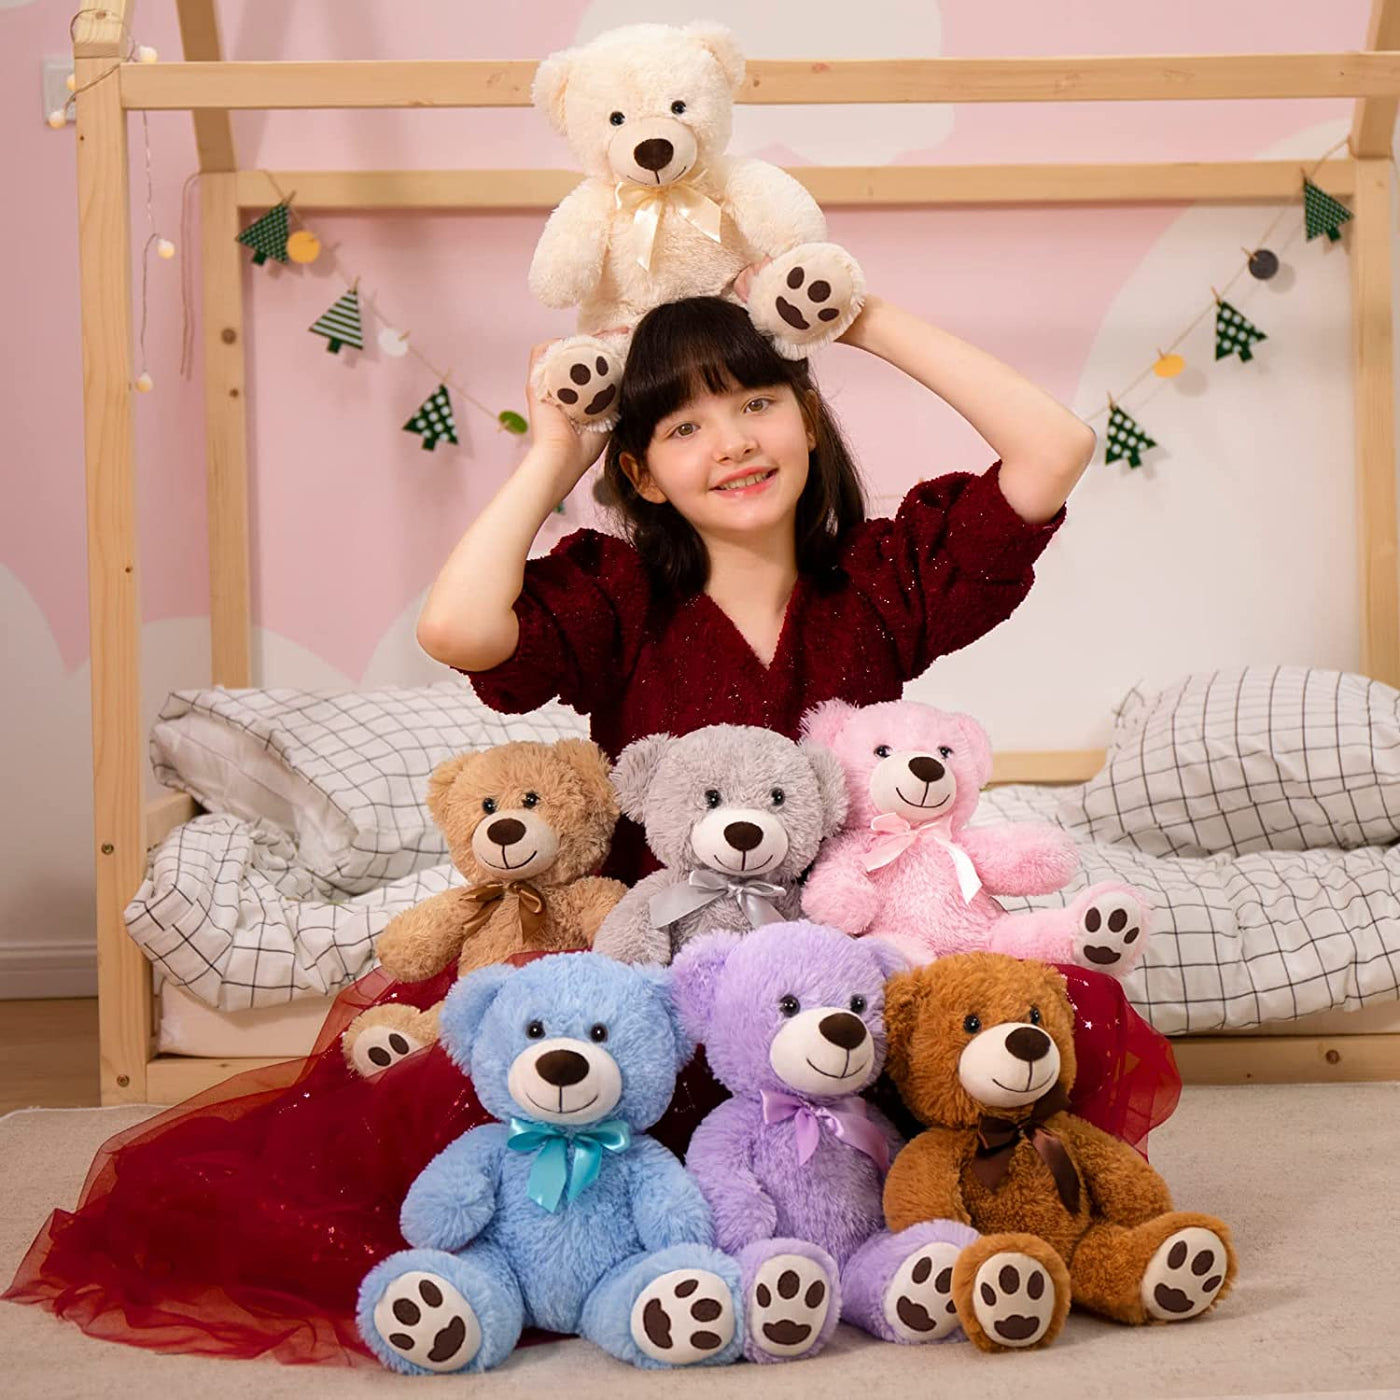 Cute Teddy Bear Stuffed Animal Plush Toys For Kids 14 Inch